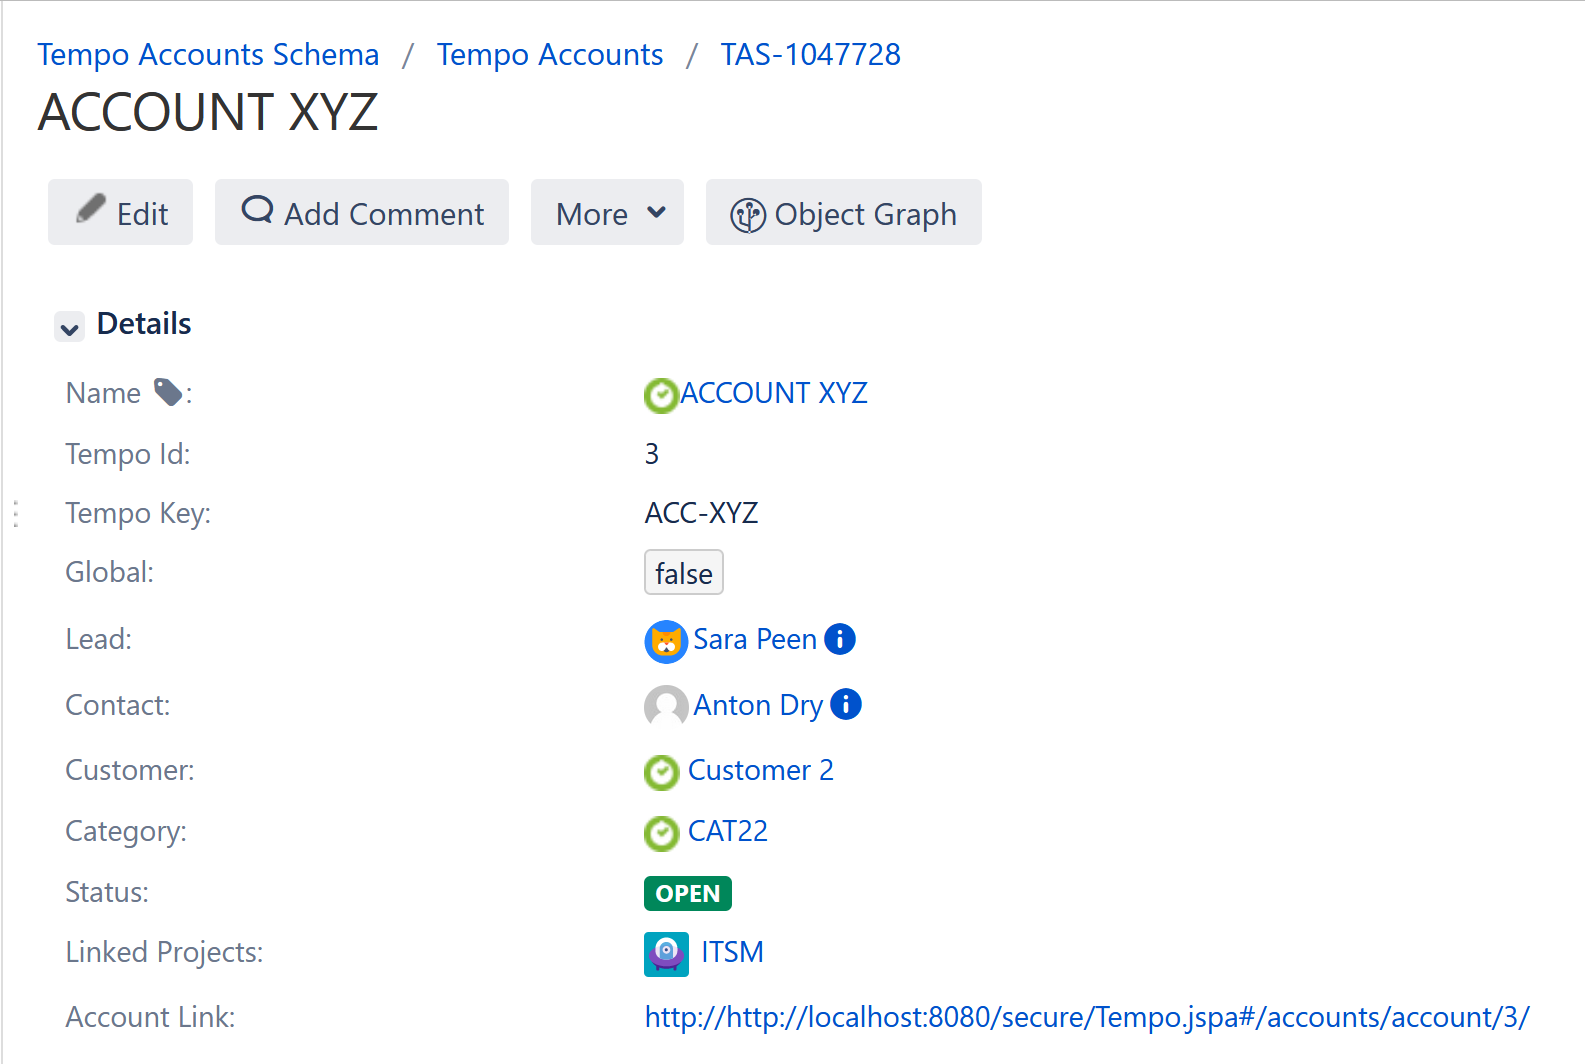 Tempo accounts schema with account link attribute